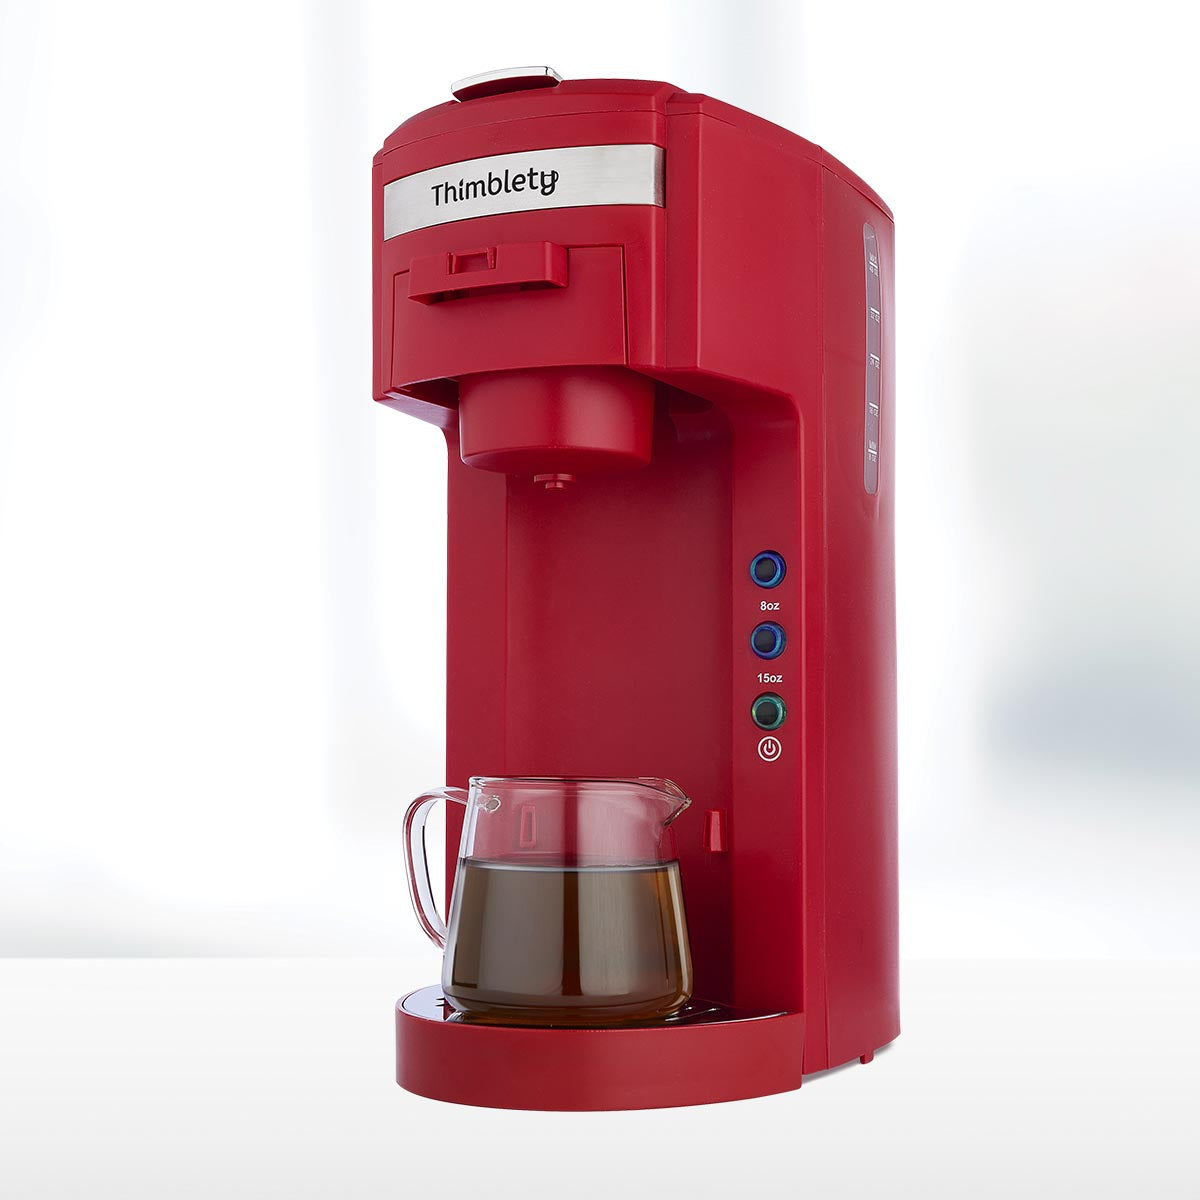 Hamilton Beach - FlexBrew Single Serve Coffee Maker - Red